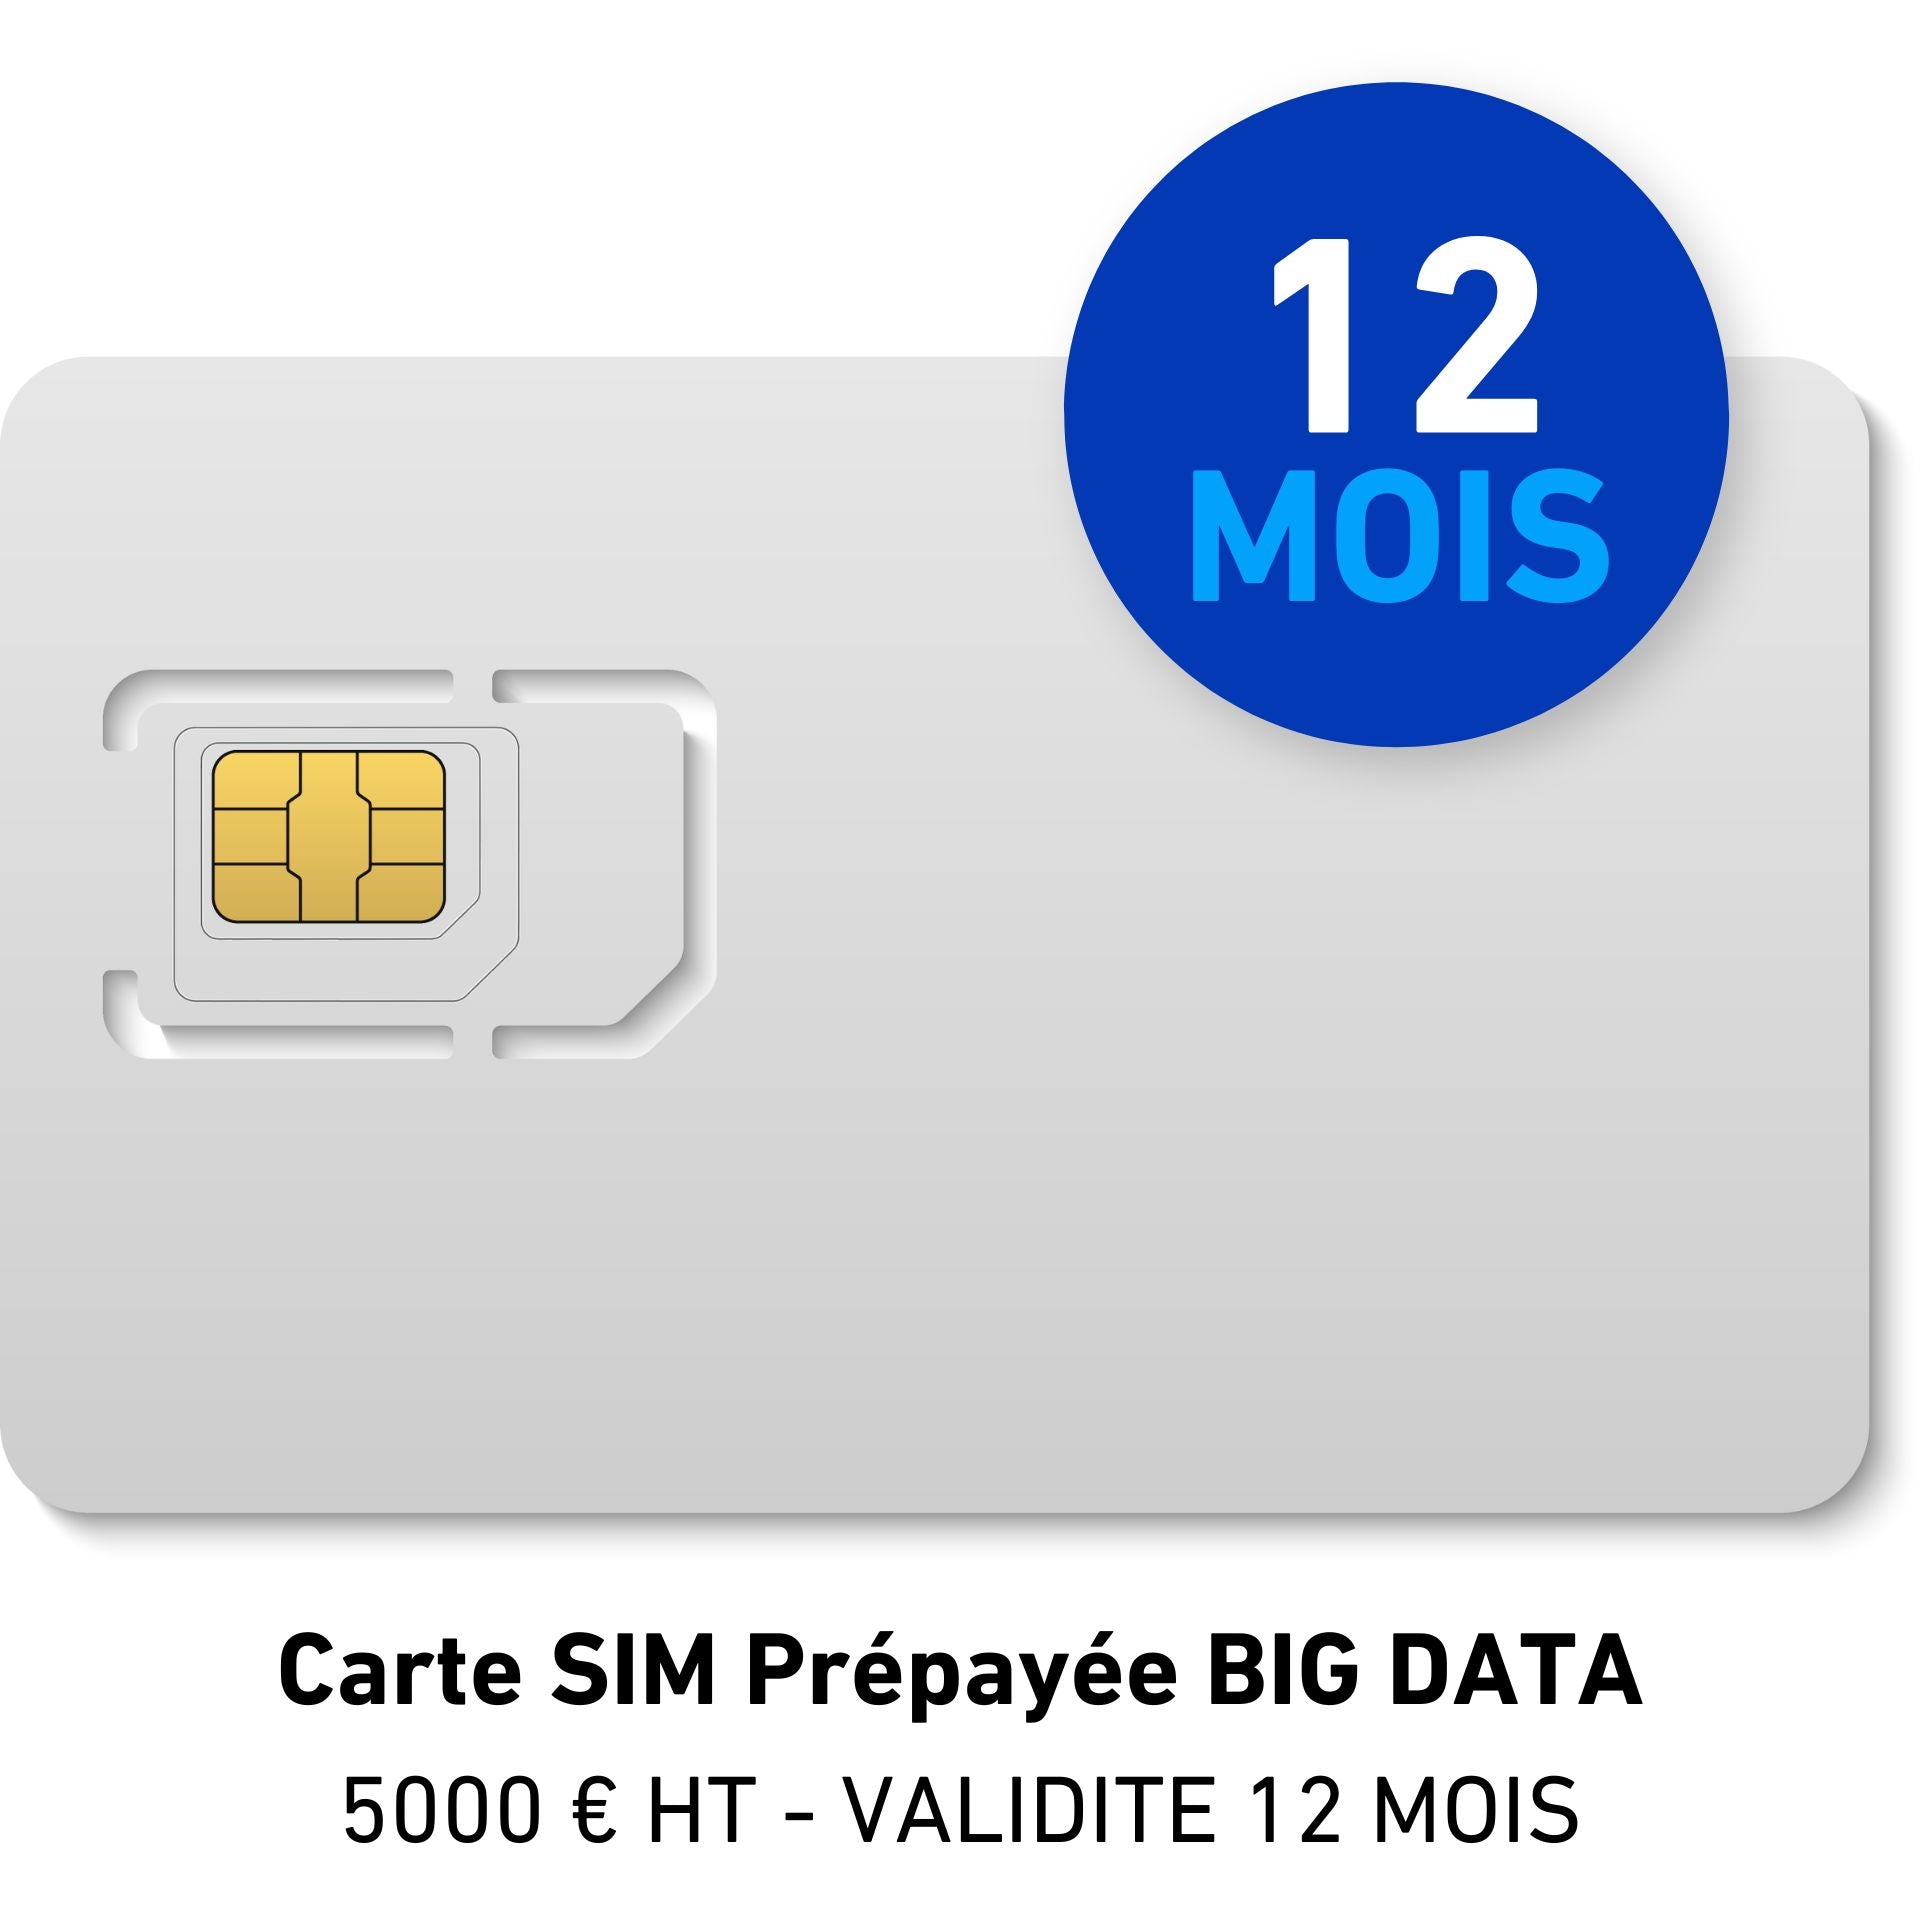 Carte SIM Prépayée BIG DATA 5000 € HT - VALIDITE 12 MOIS